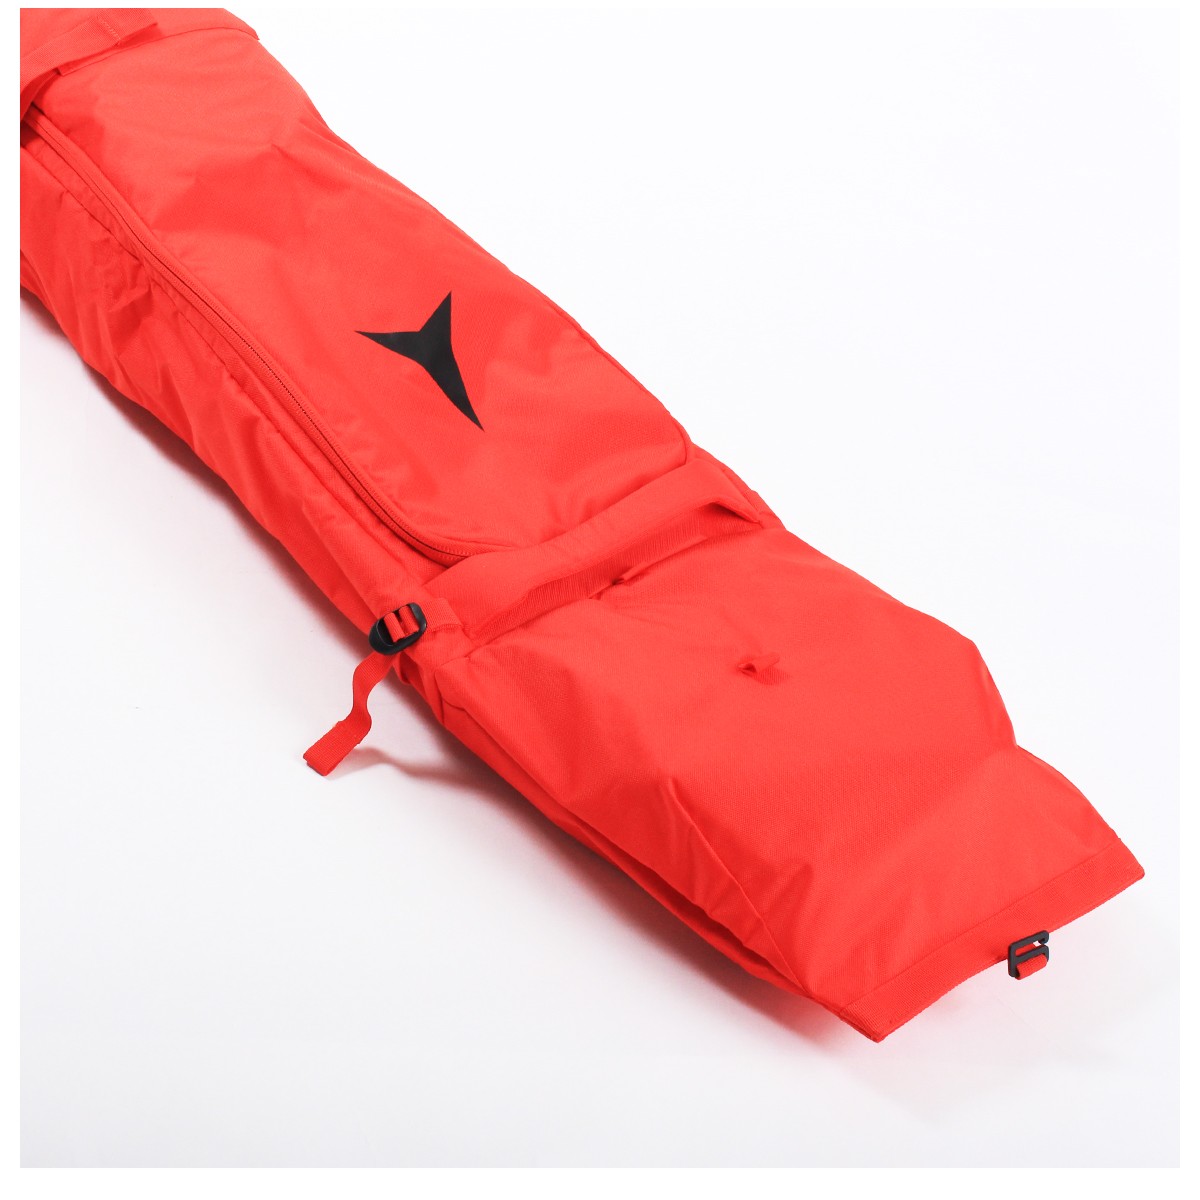 ATOMIC〔Double Ski Case・Ski Bag〕 RS DOUBLE SKI WHE - Ski Shop 